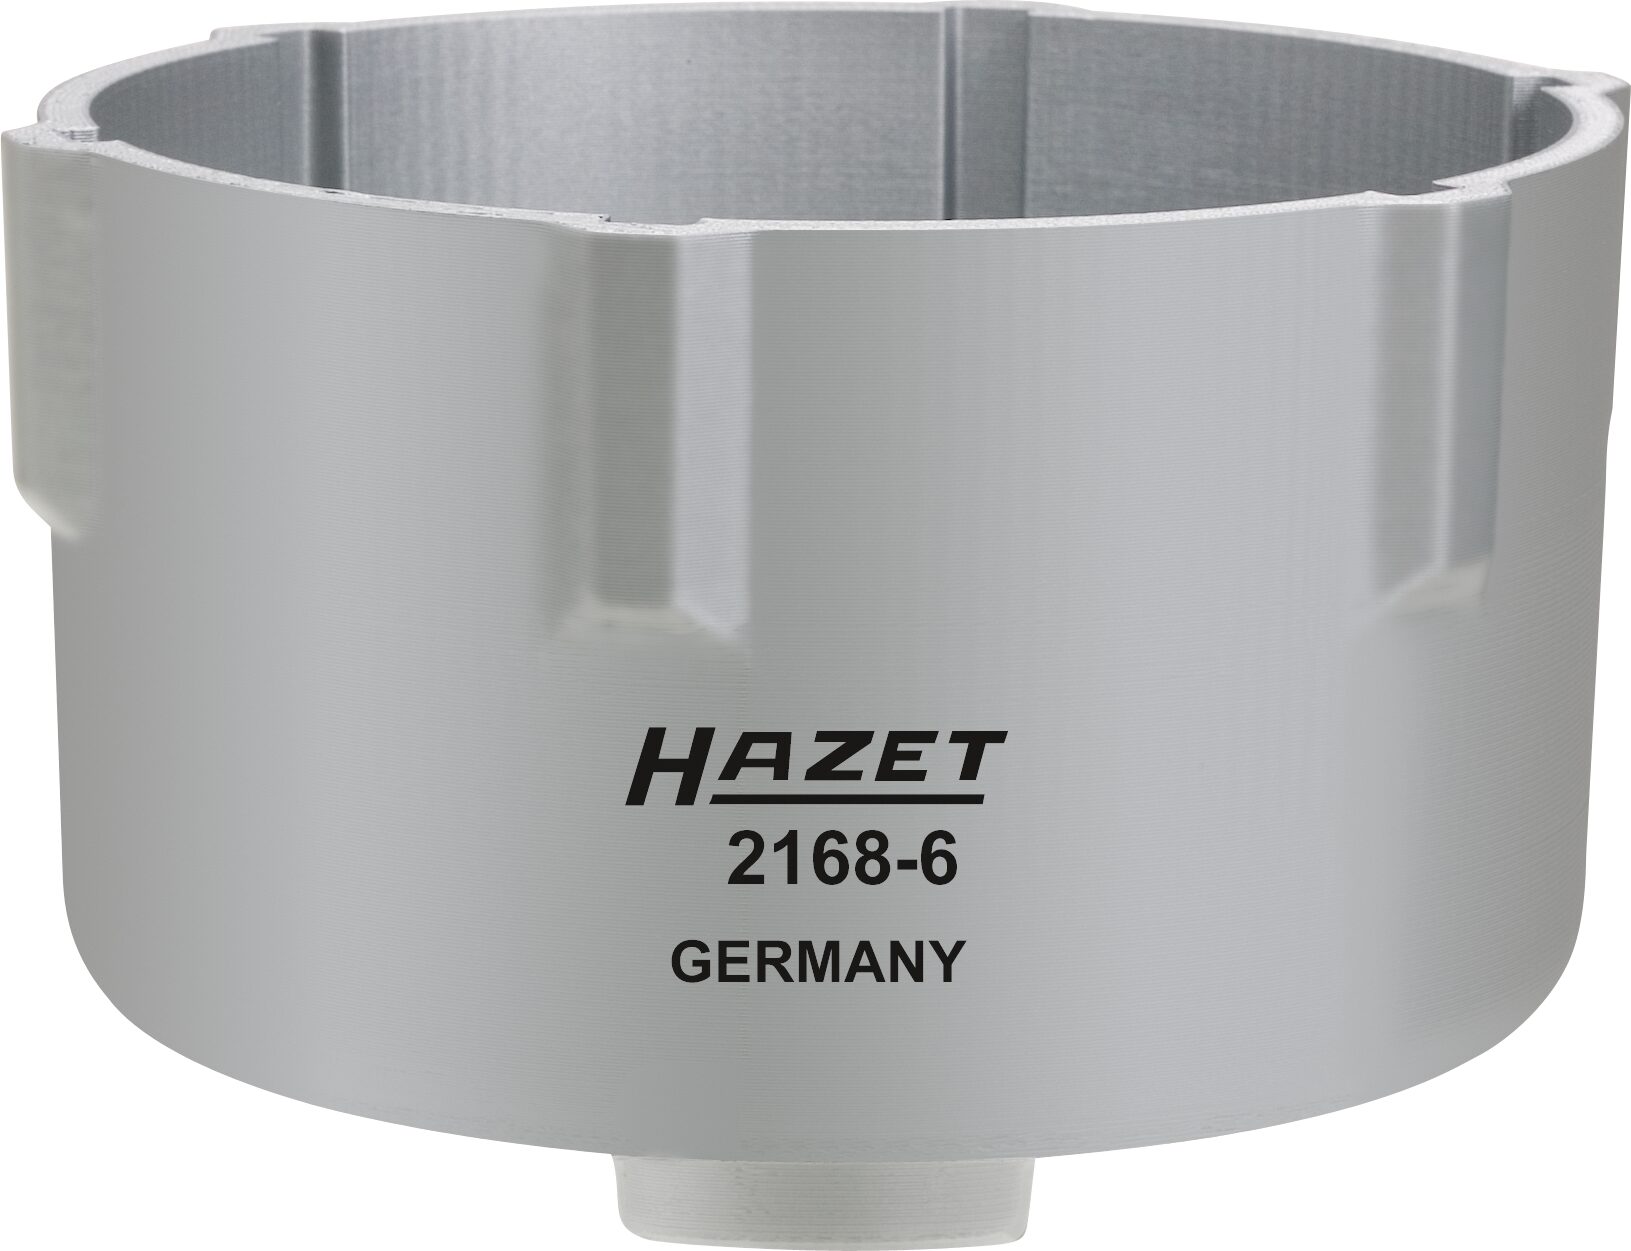 HAZET Kraftstofffilter-Lösewerkzeug 2168-6 · Vierkant hohl 10 mm (3/8 Zoll) · Rillenprofil · 117.5 mm